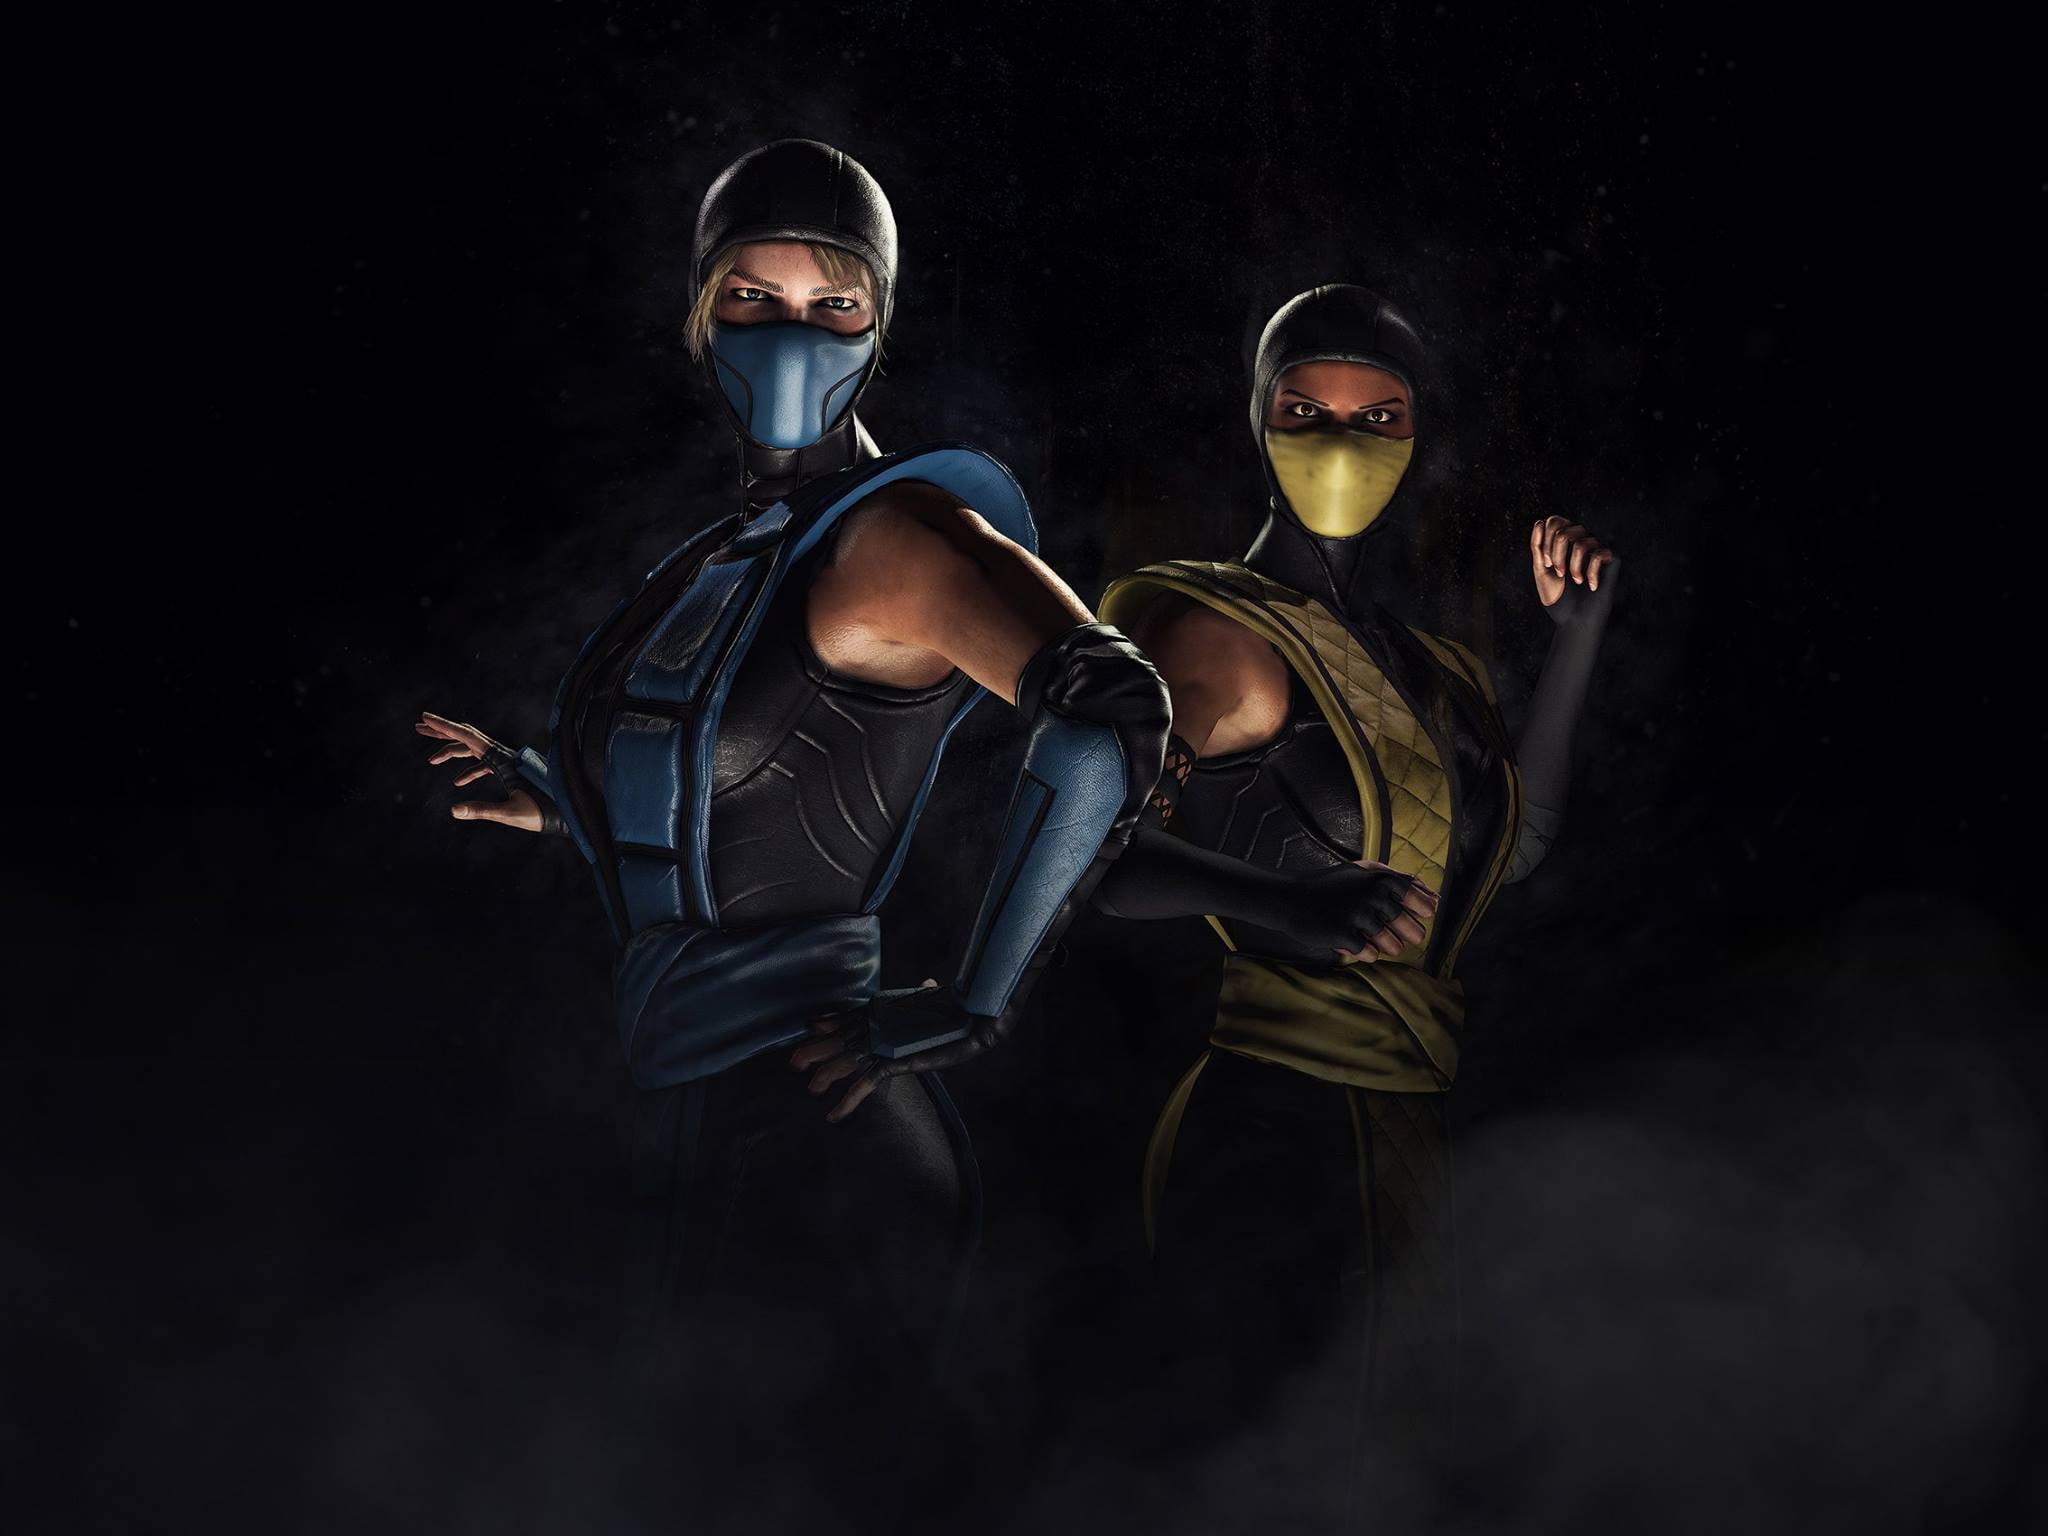 Sub Zero and Scorpion Mortal Kombat display wallpaper